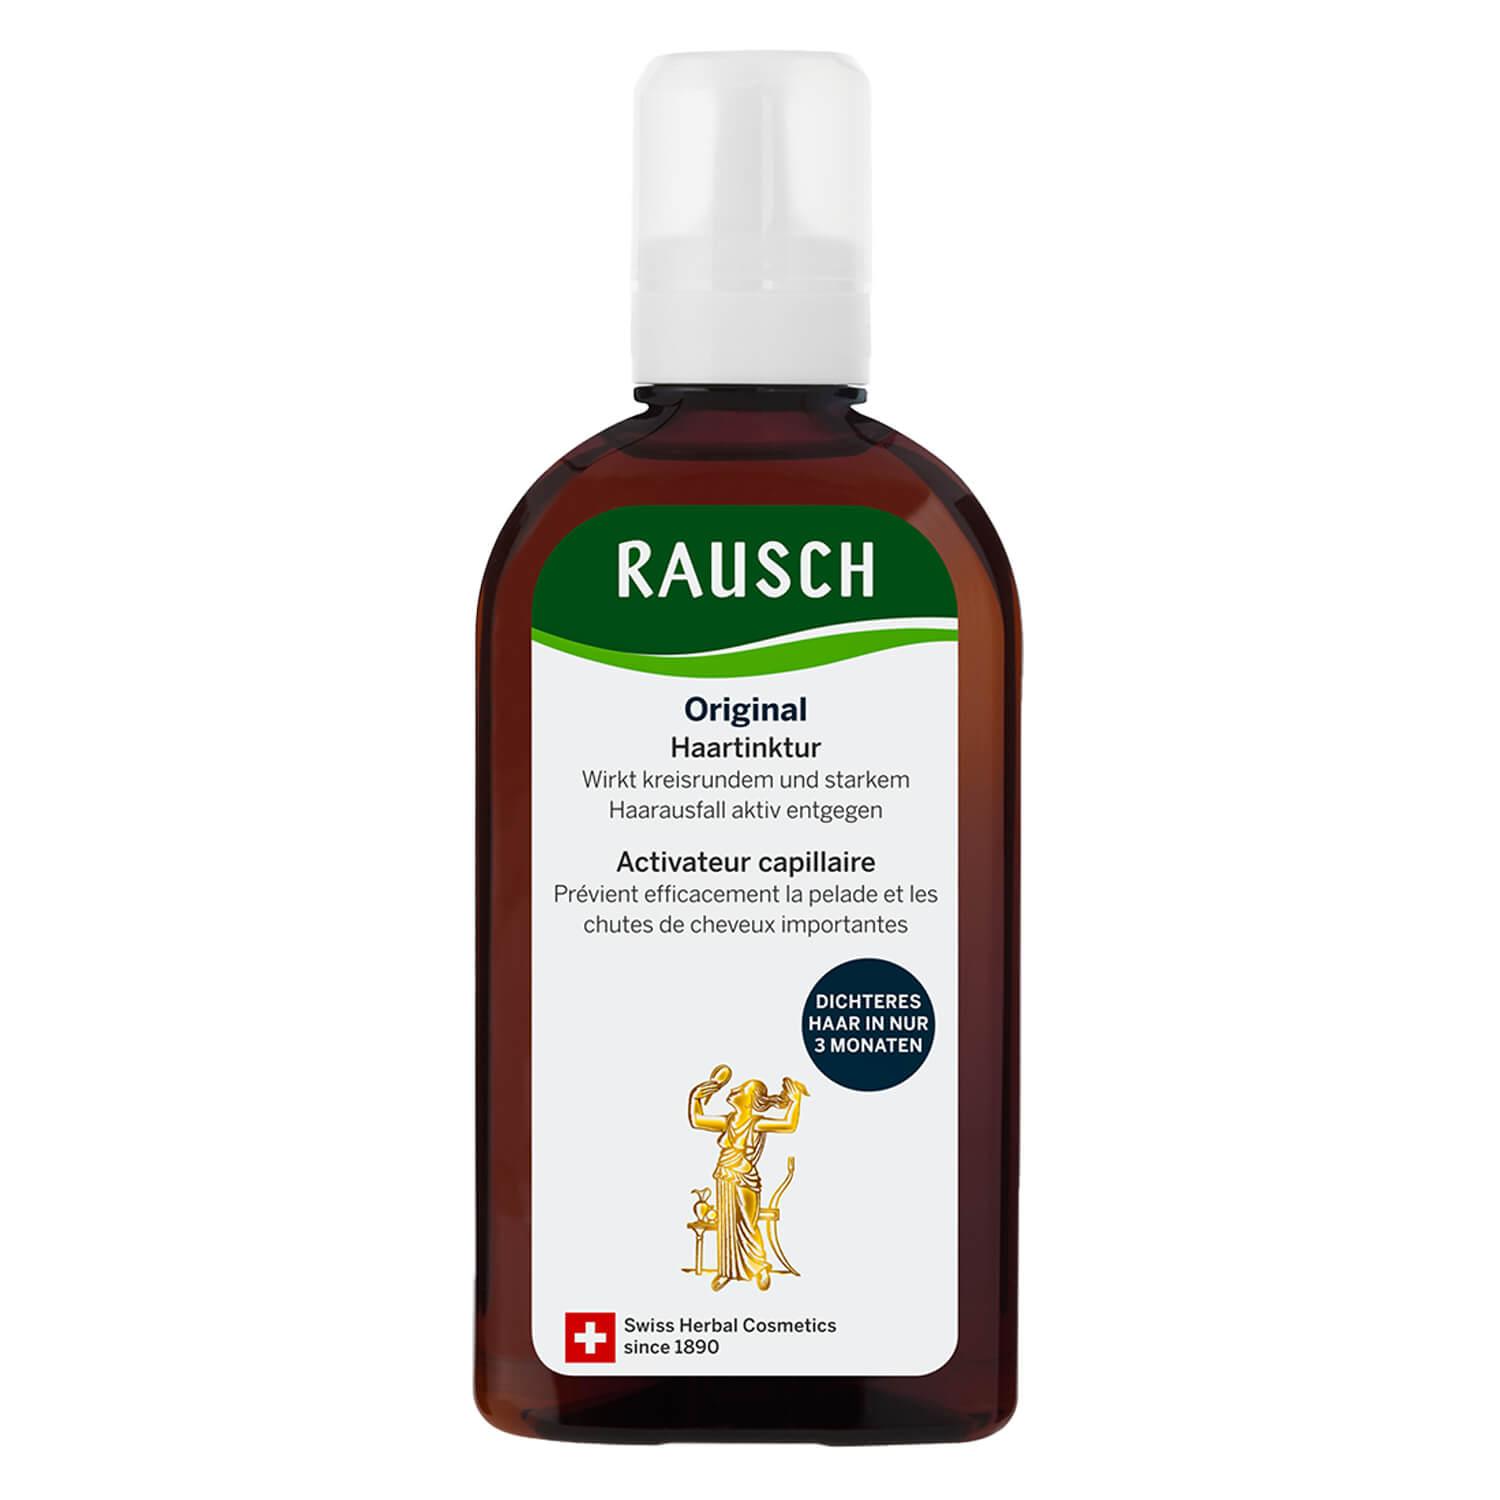 RAUSCH - Original hair tincture